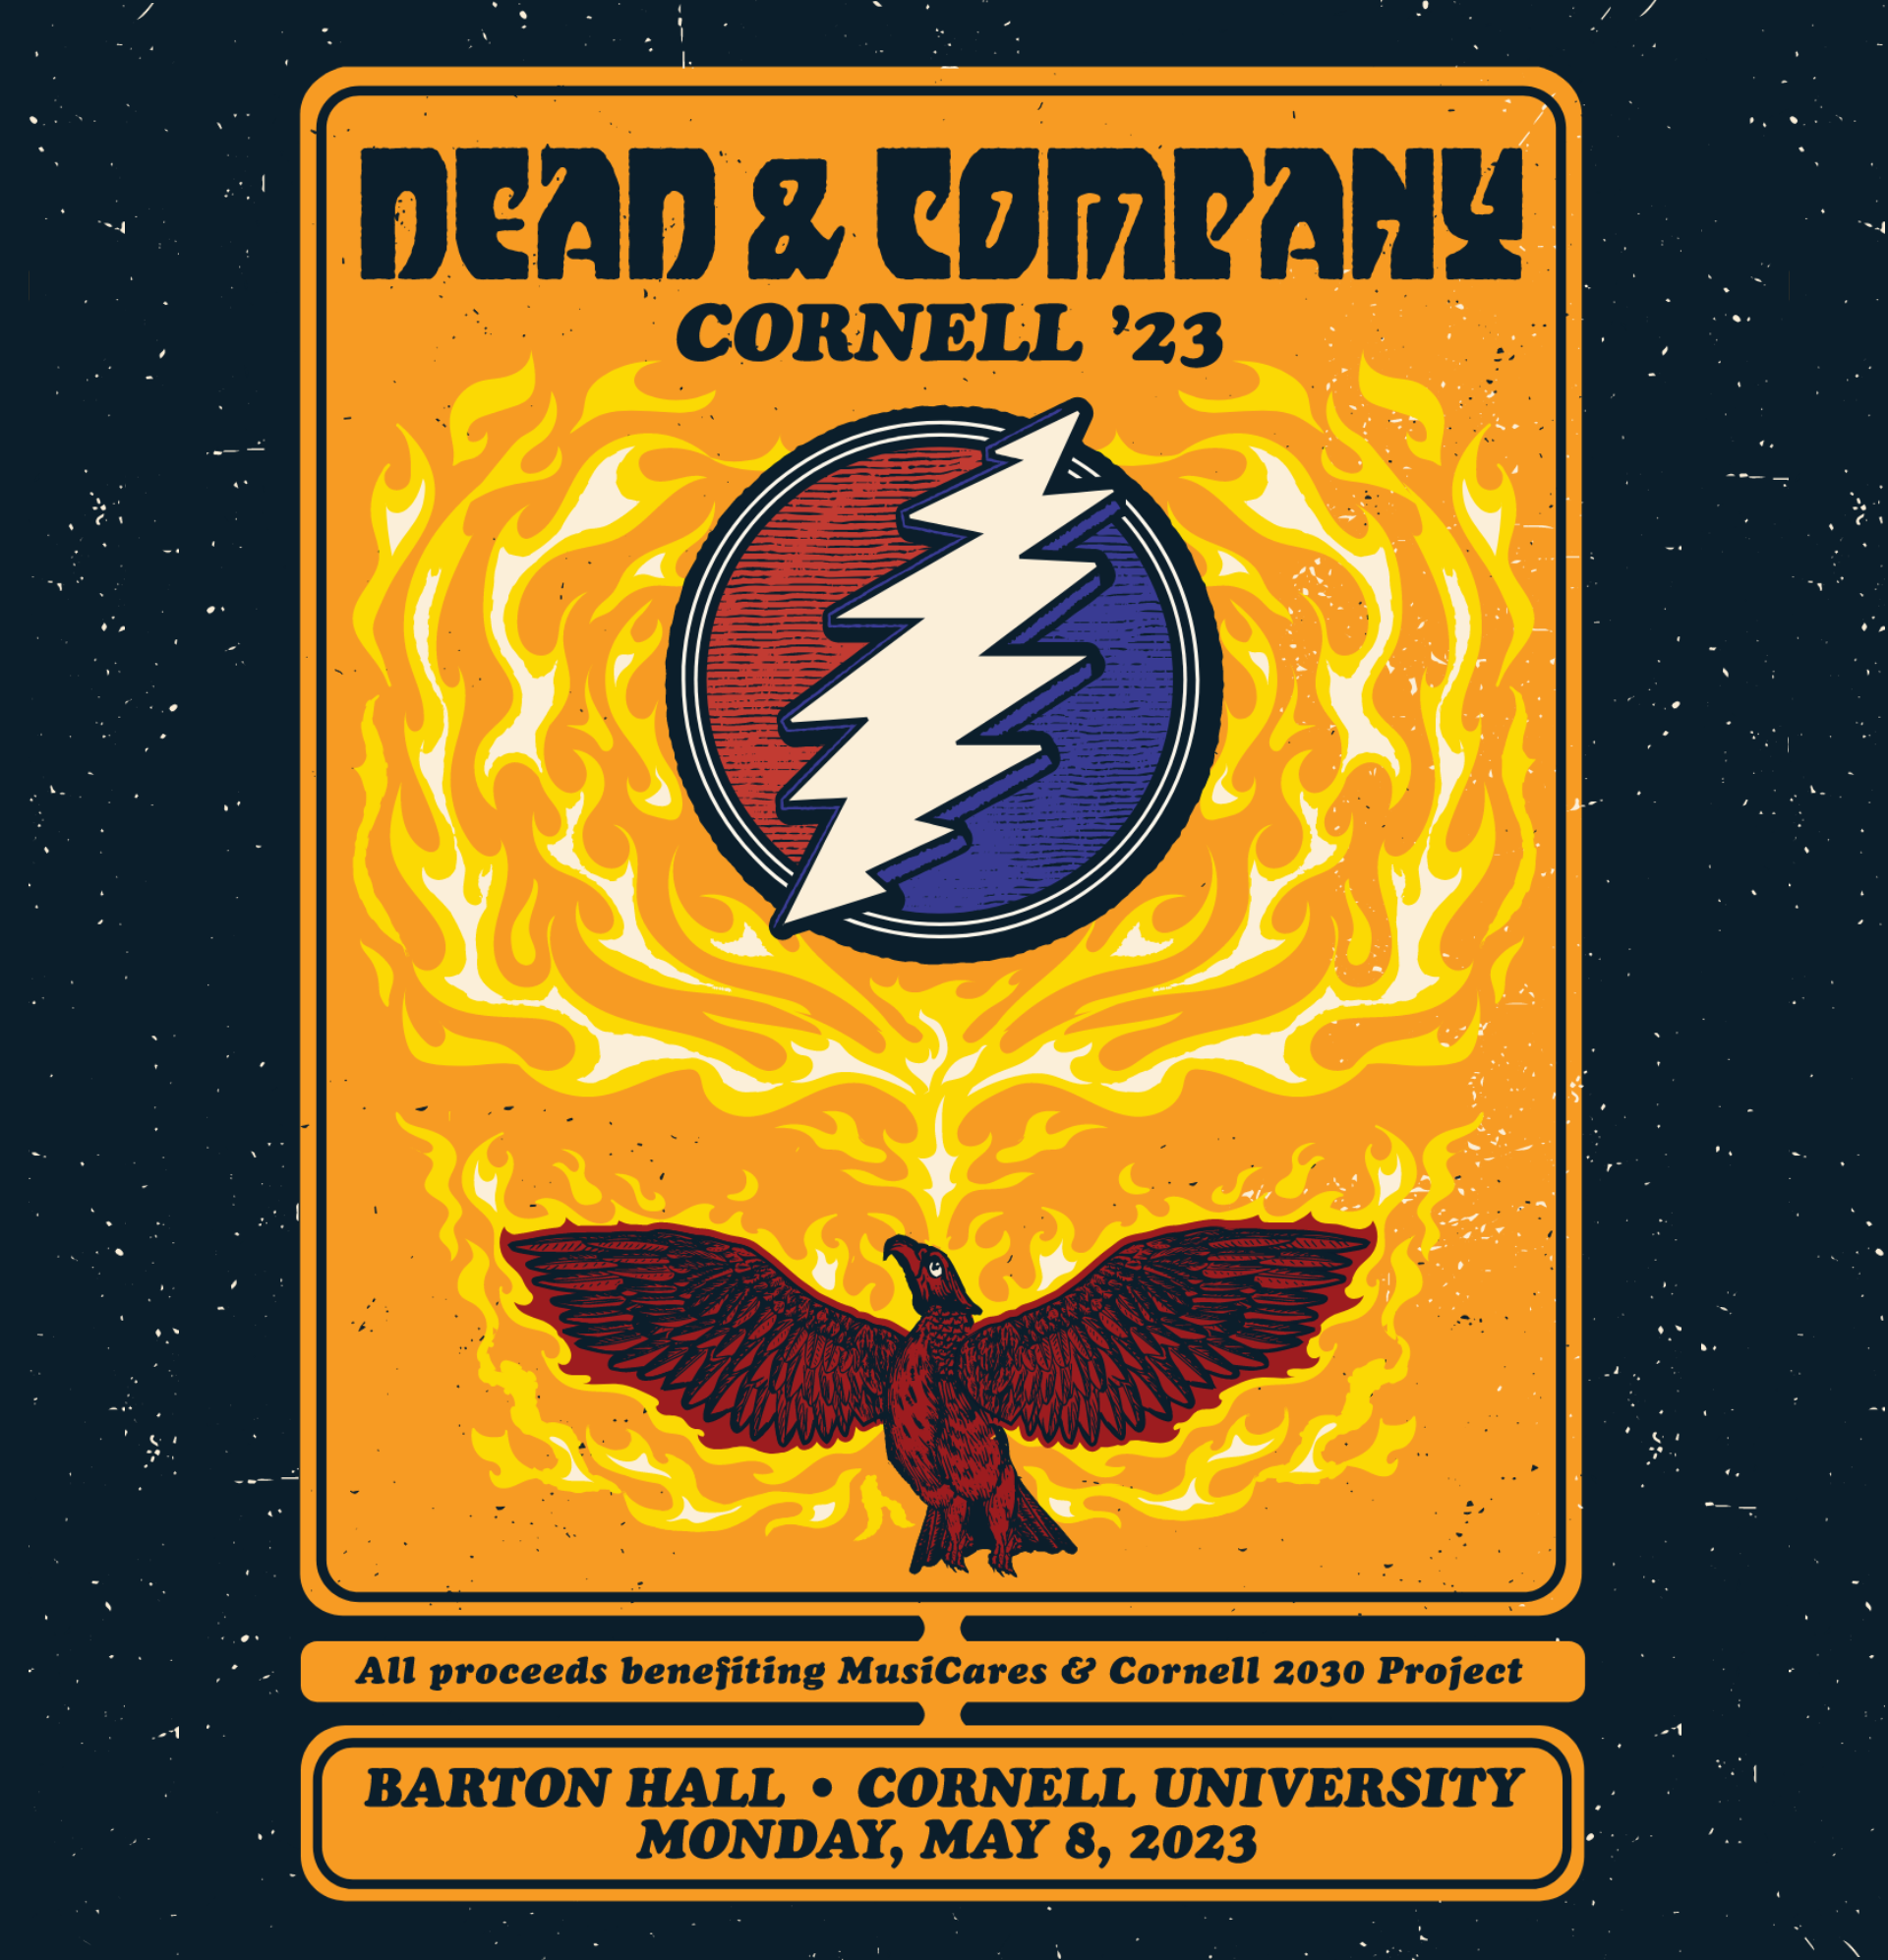 Dead & Company Cornell 2023 Poster www.imisca.jp